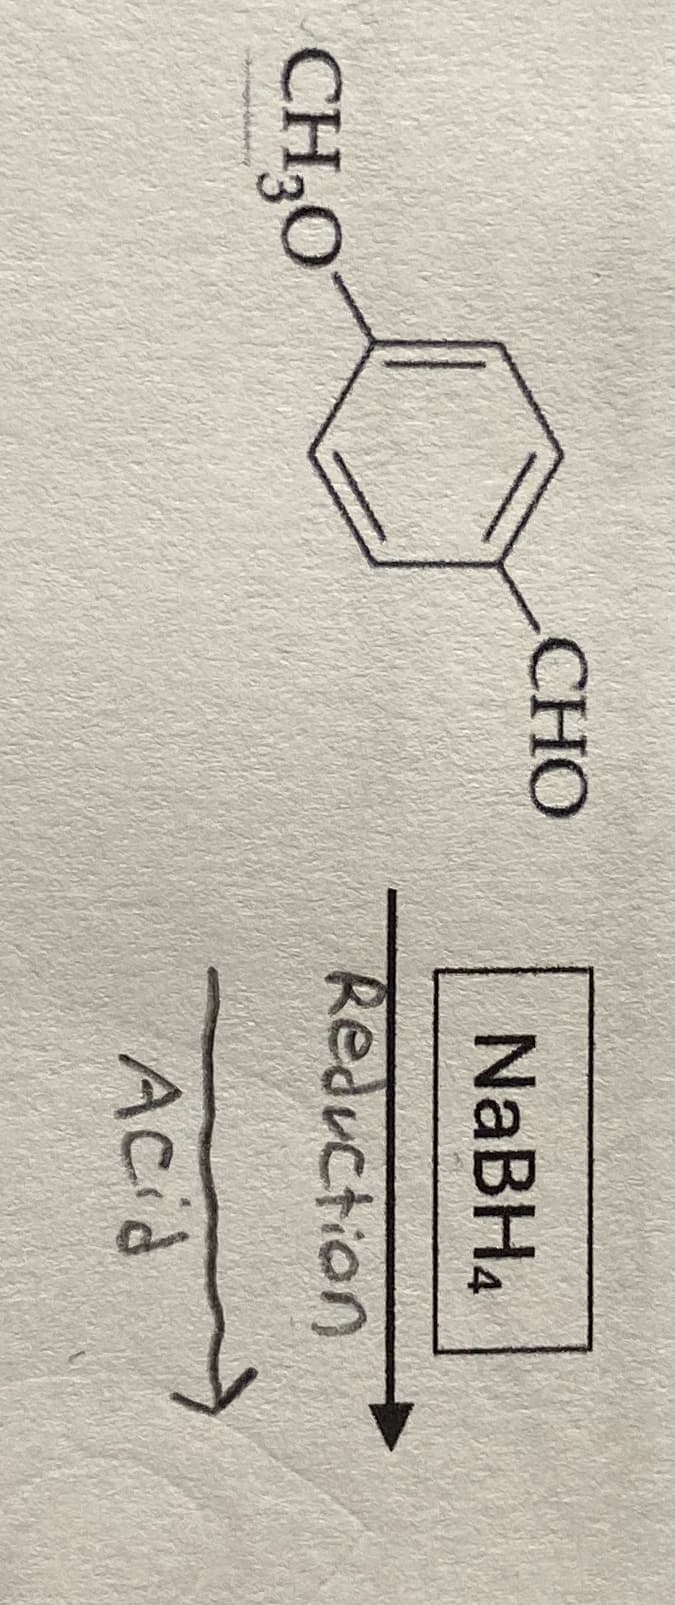 CH₂O
CHO
NaBH₁
Reduction
Acid